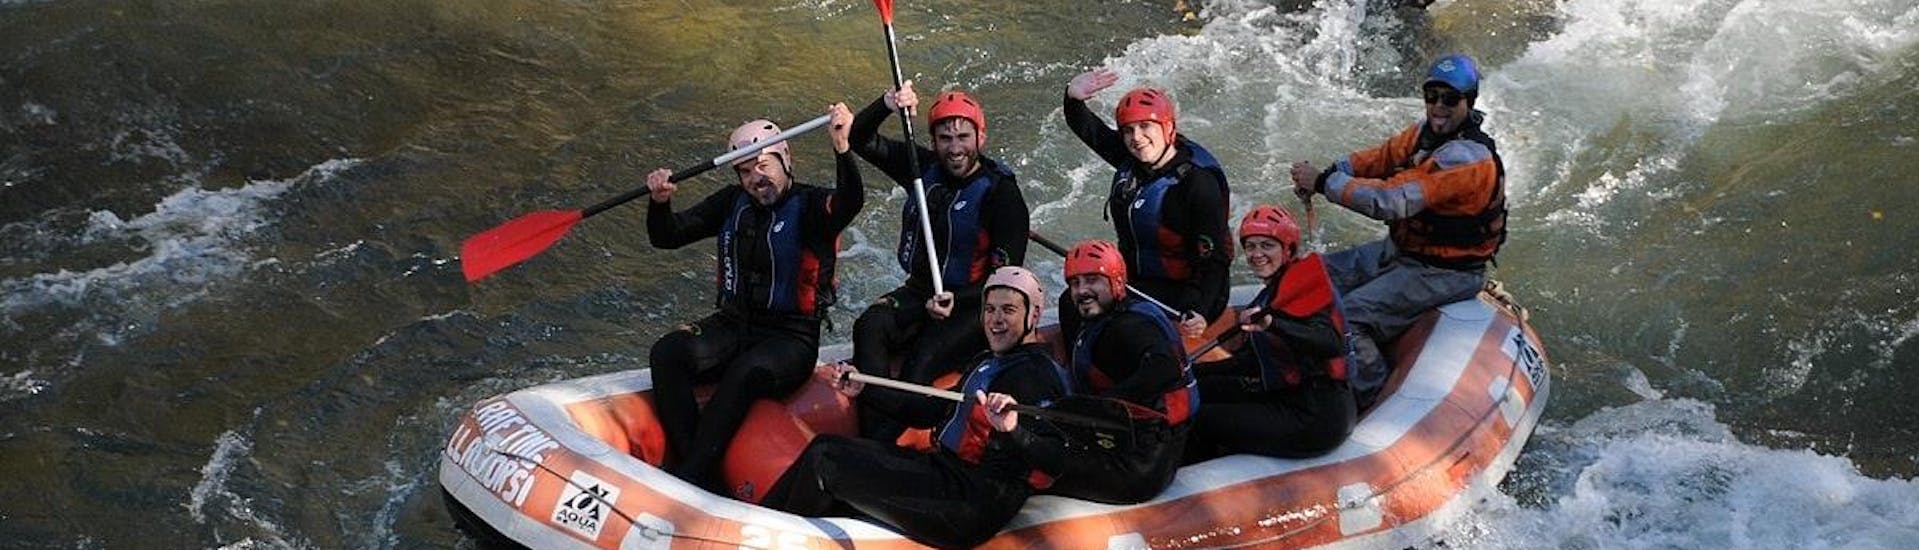 Rafting facile à Llavorsí - Noguera Pallaresa.